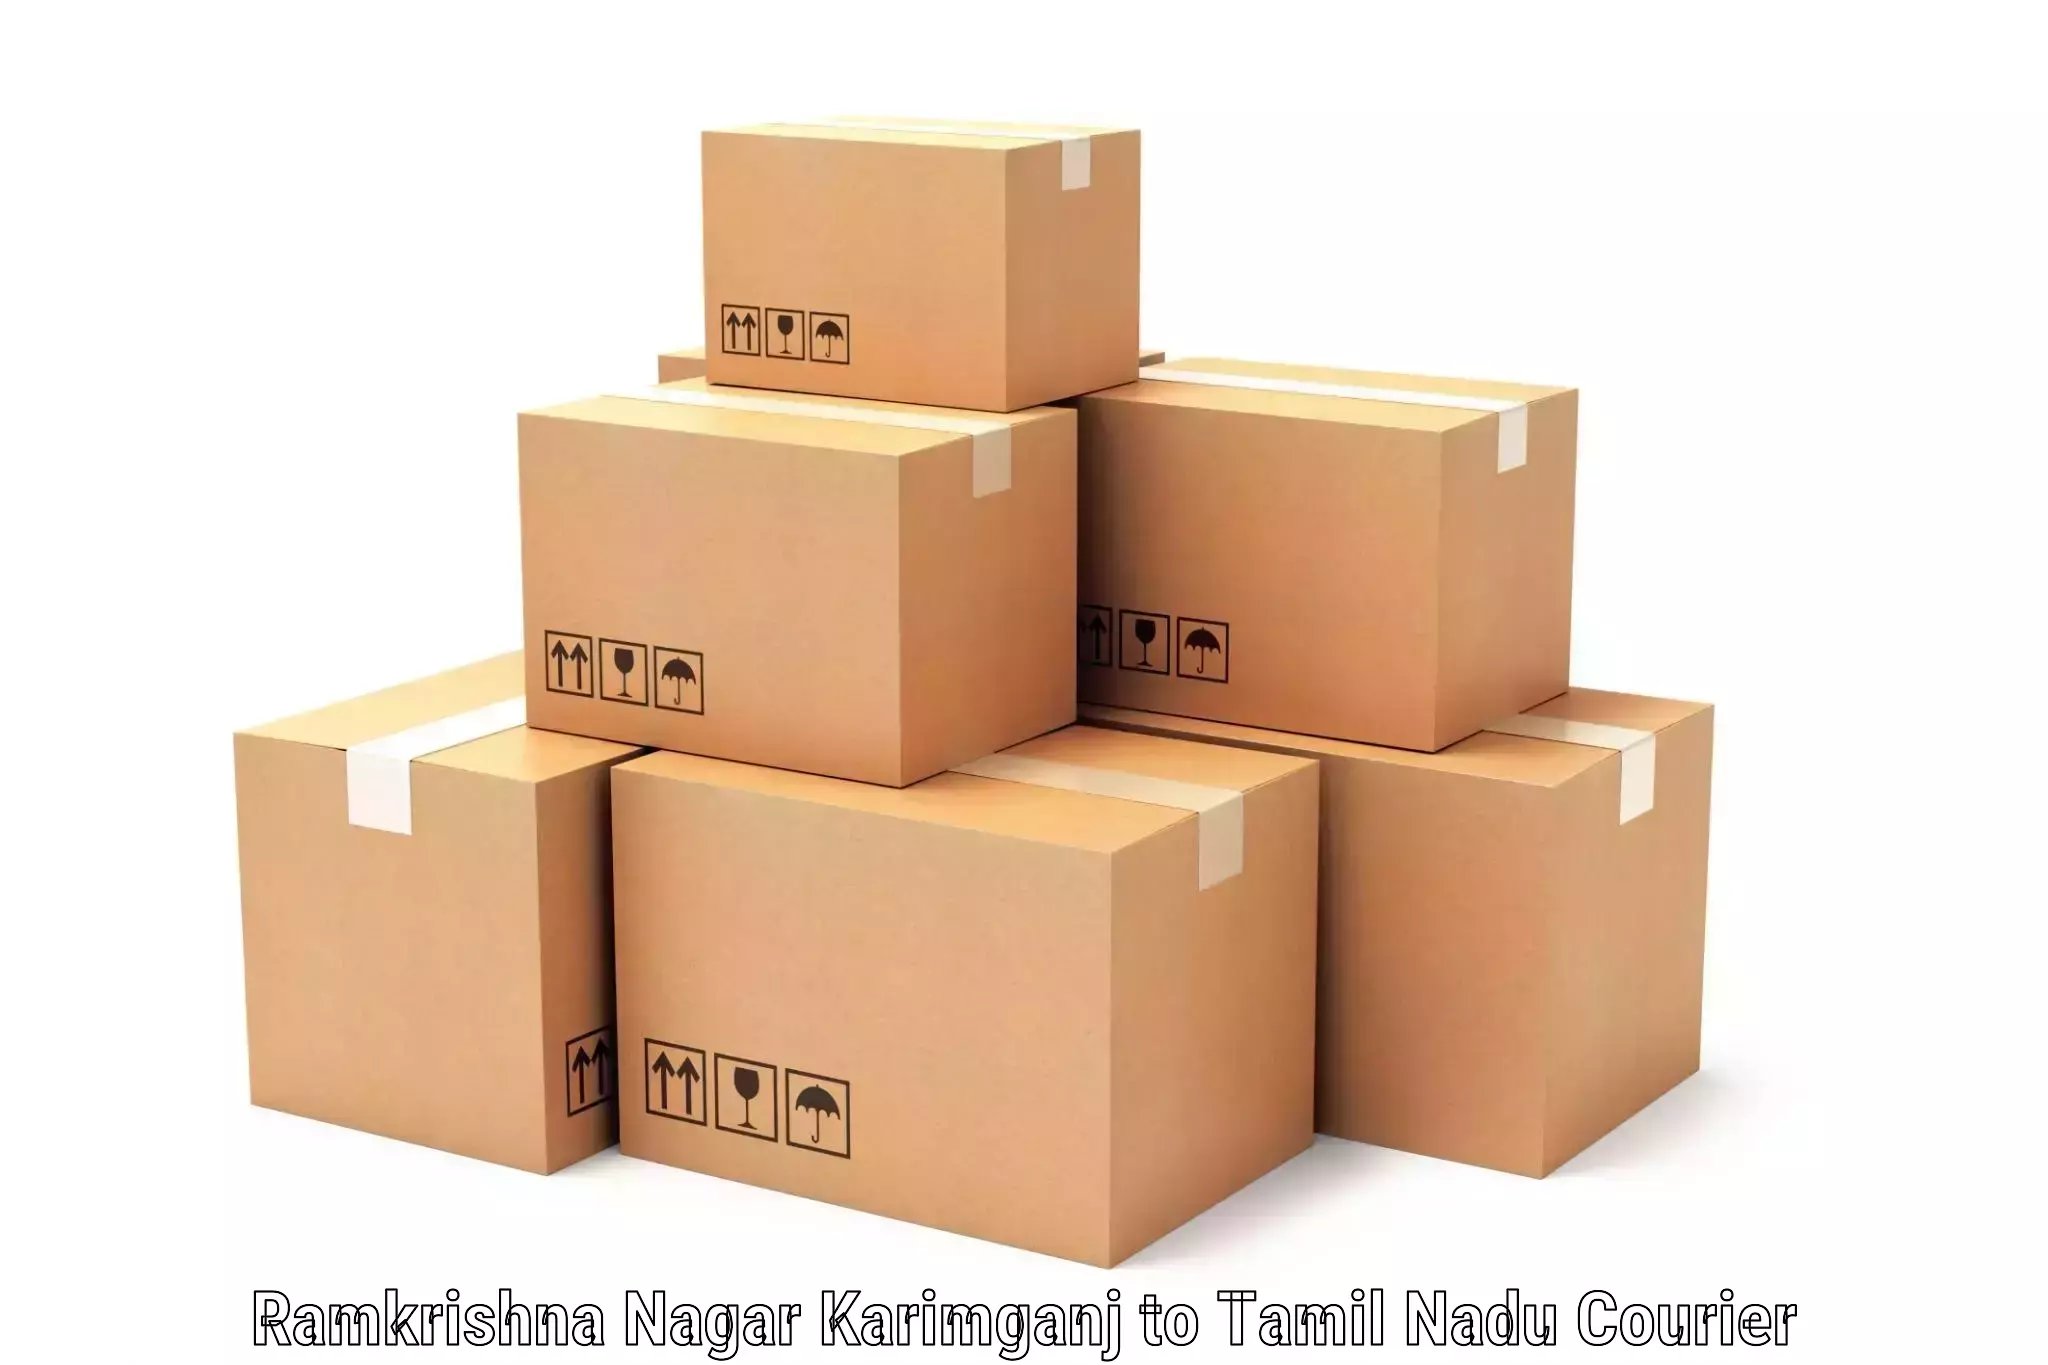 High-capacity parcel service Ramkrishna Nagar Karimganj to Perunali